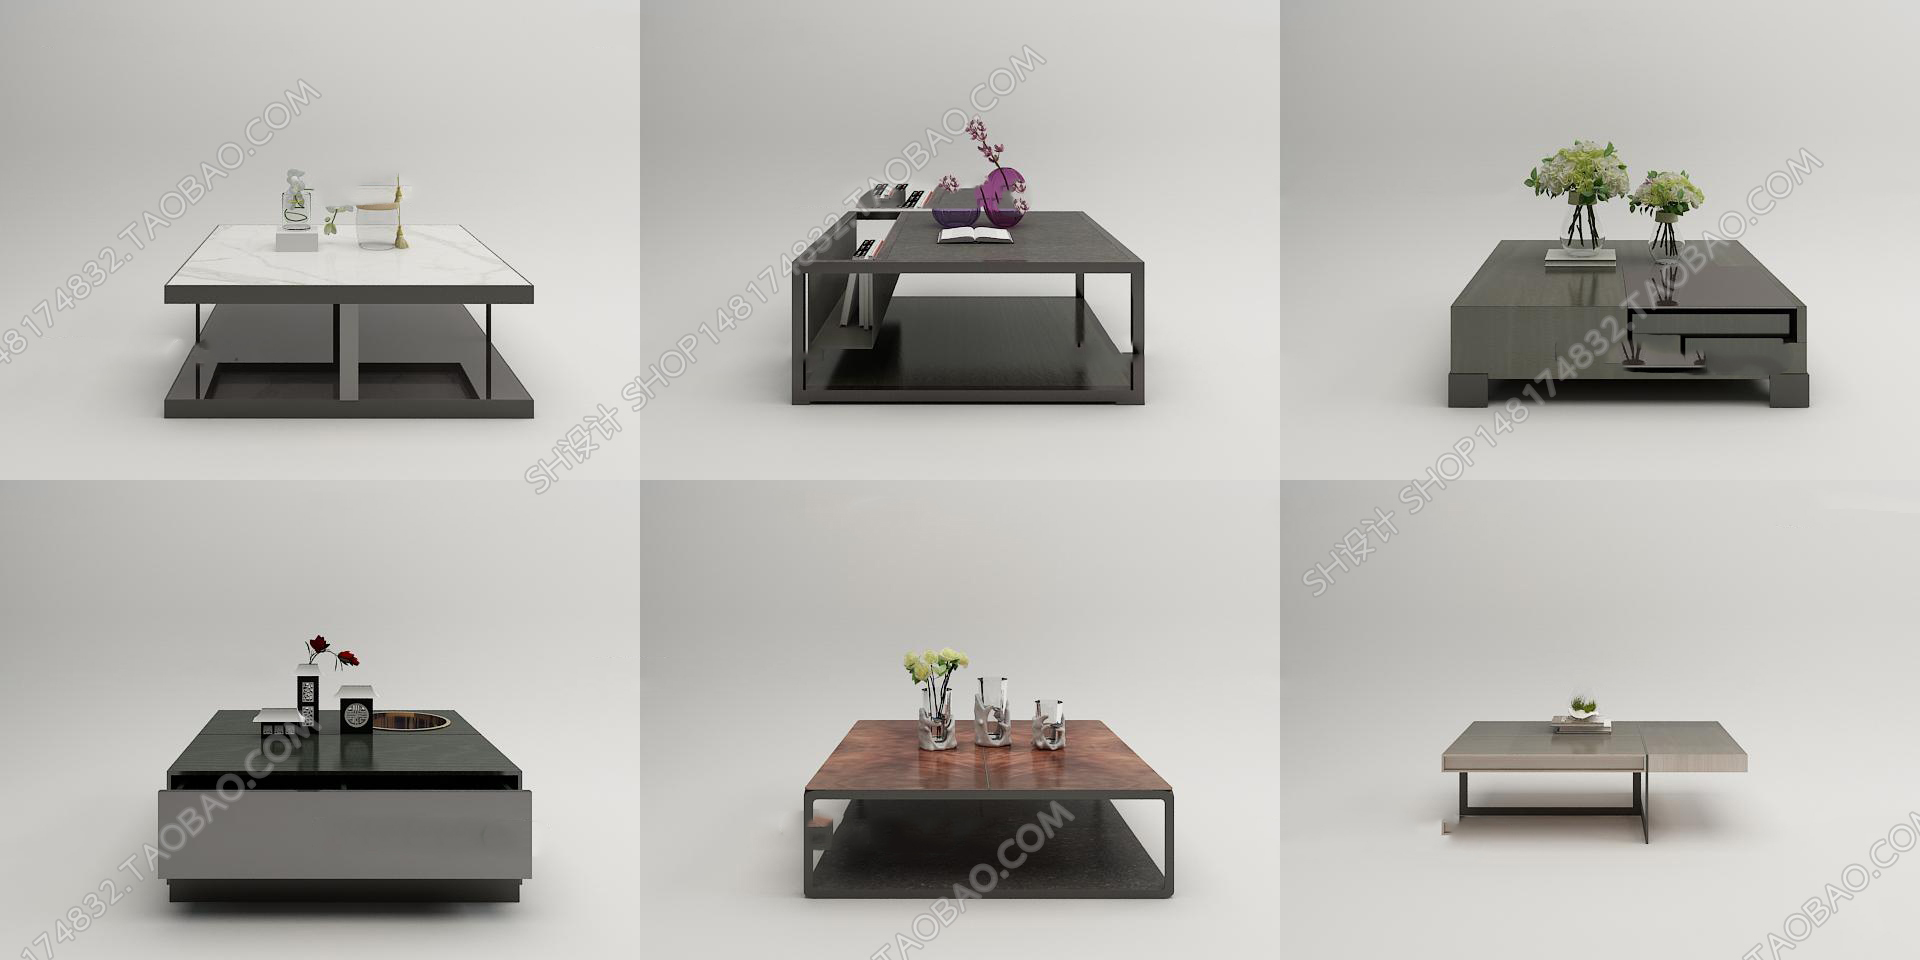 3DSKY MODELS – COFFEE TABLE 3D MODELS – 010 - thumbnail 1